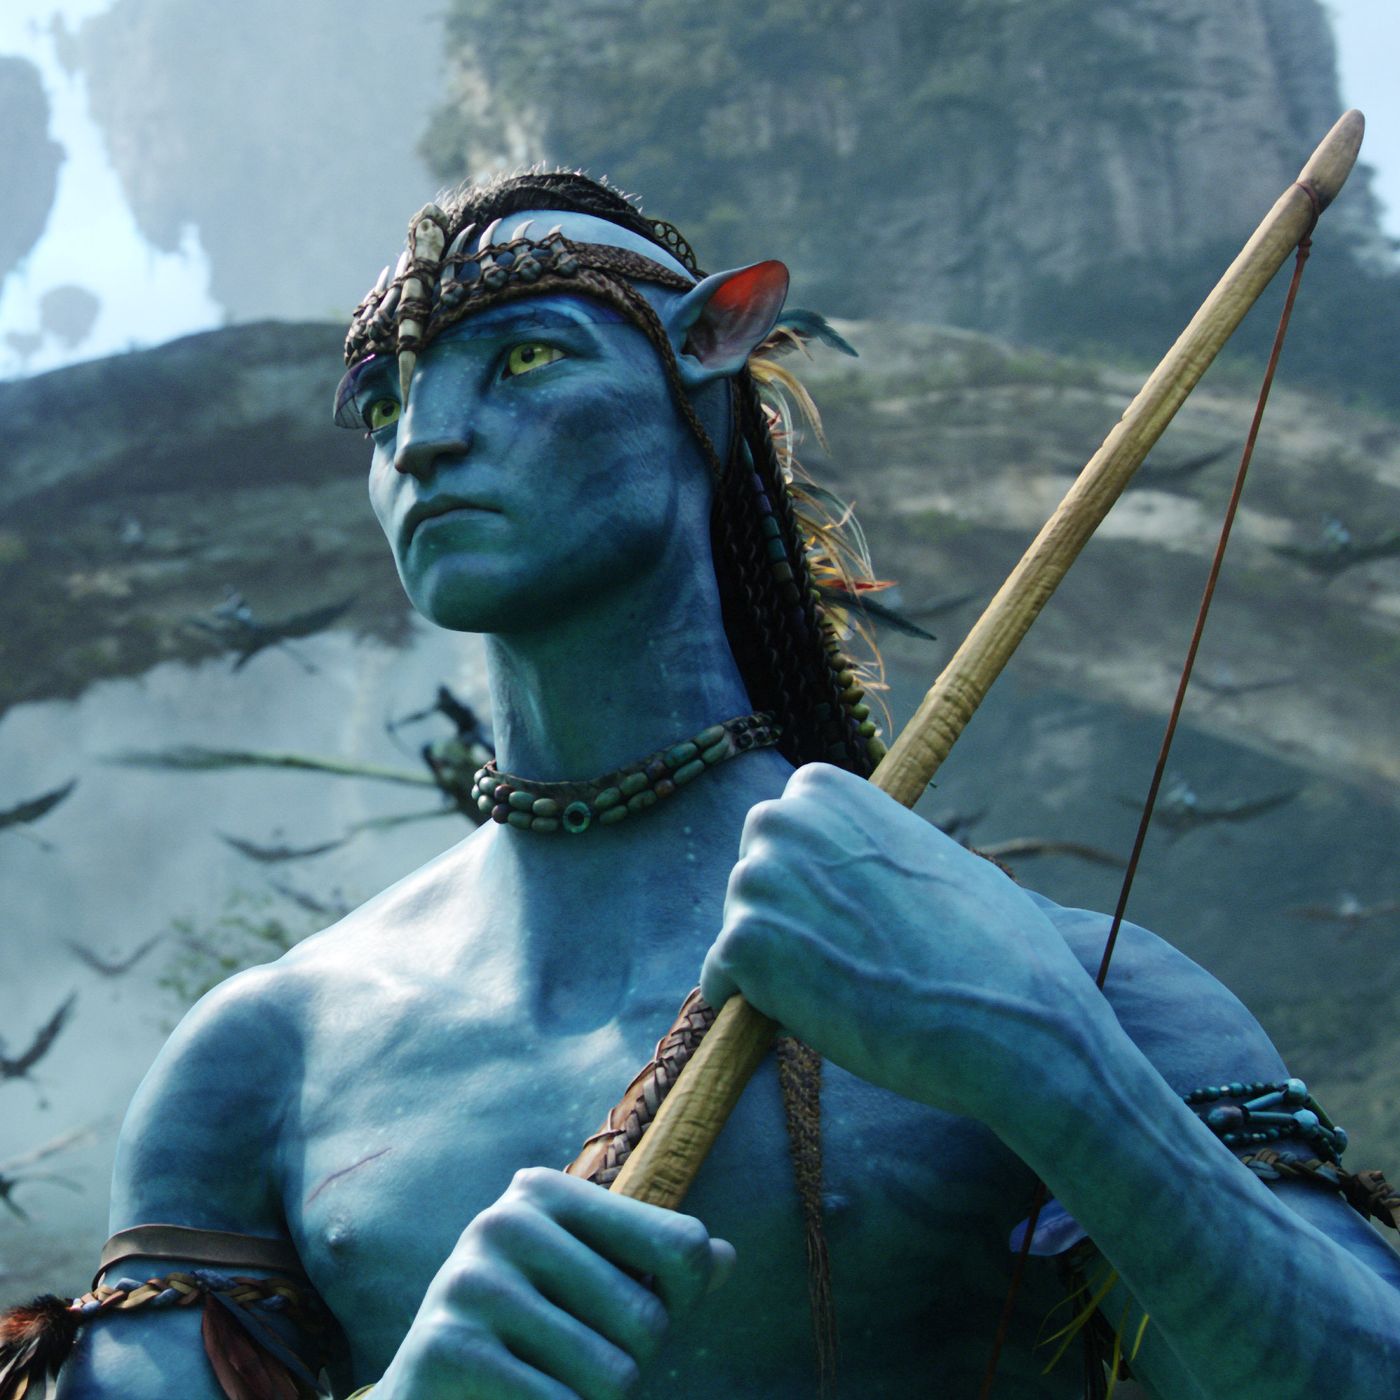 Billiondollar Avatar 2 sequels get back on set after COVID19  Vietnam  Times